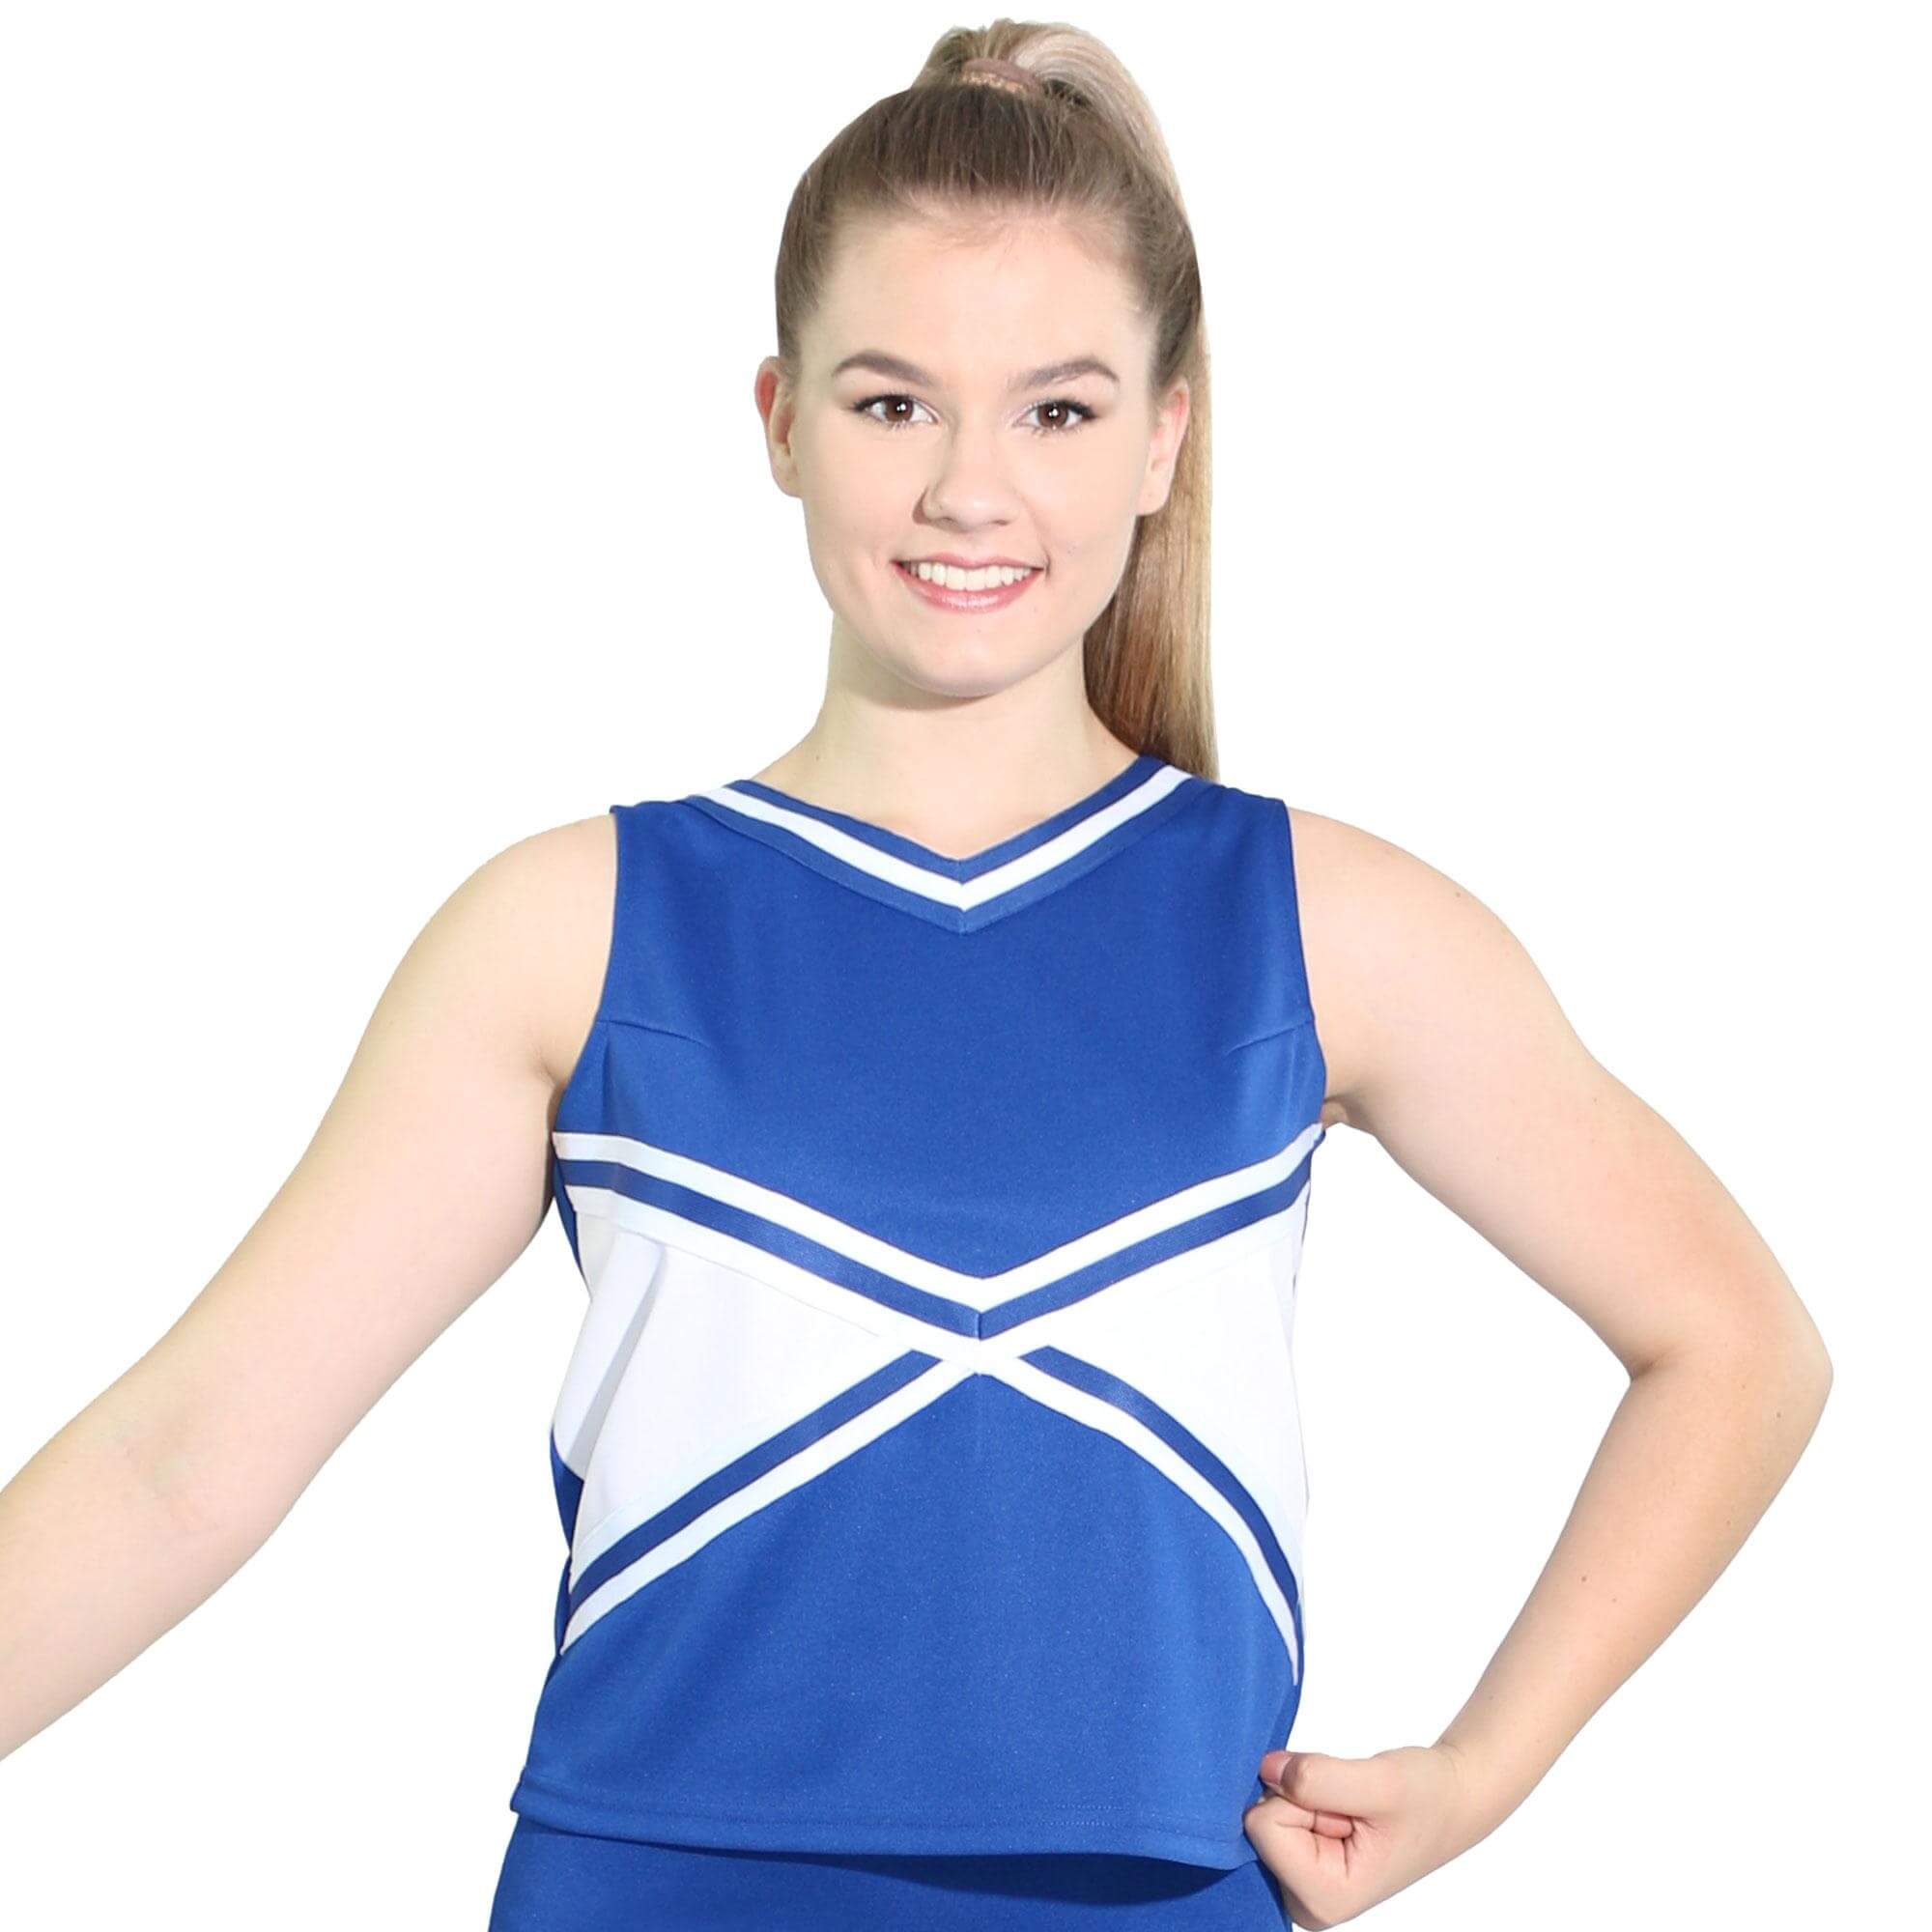 Danzcue Adult 2-Color Kick Sweetheart Cheerleaders Uniform Shell Top - Click Image to Close